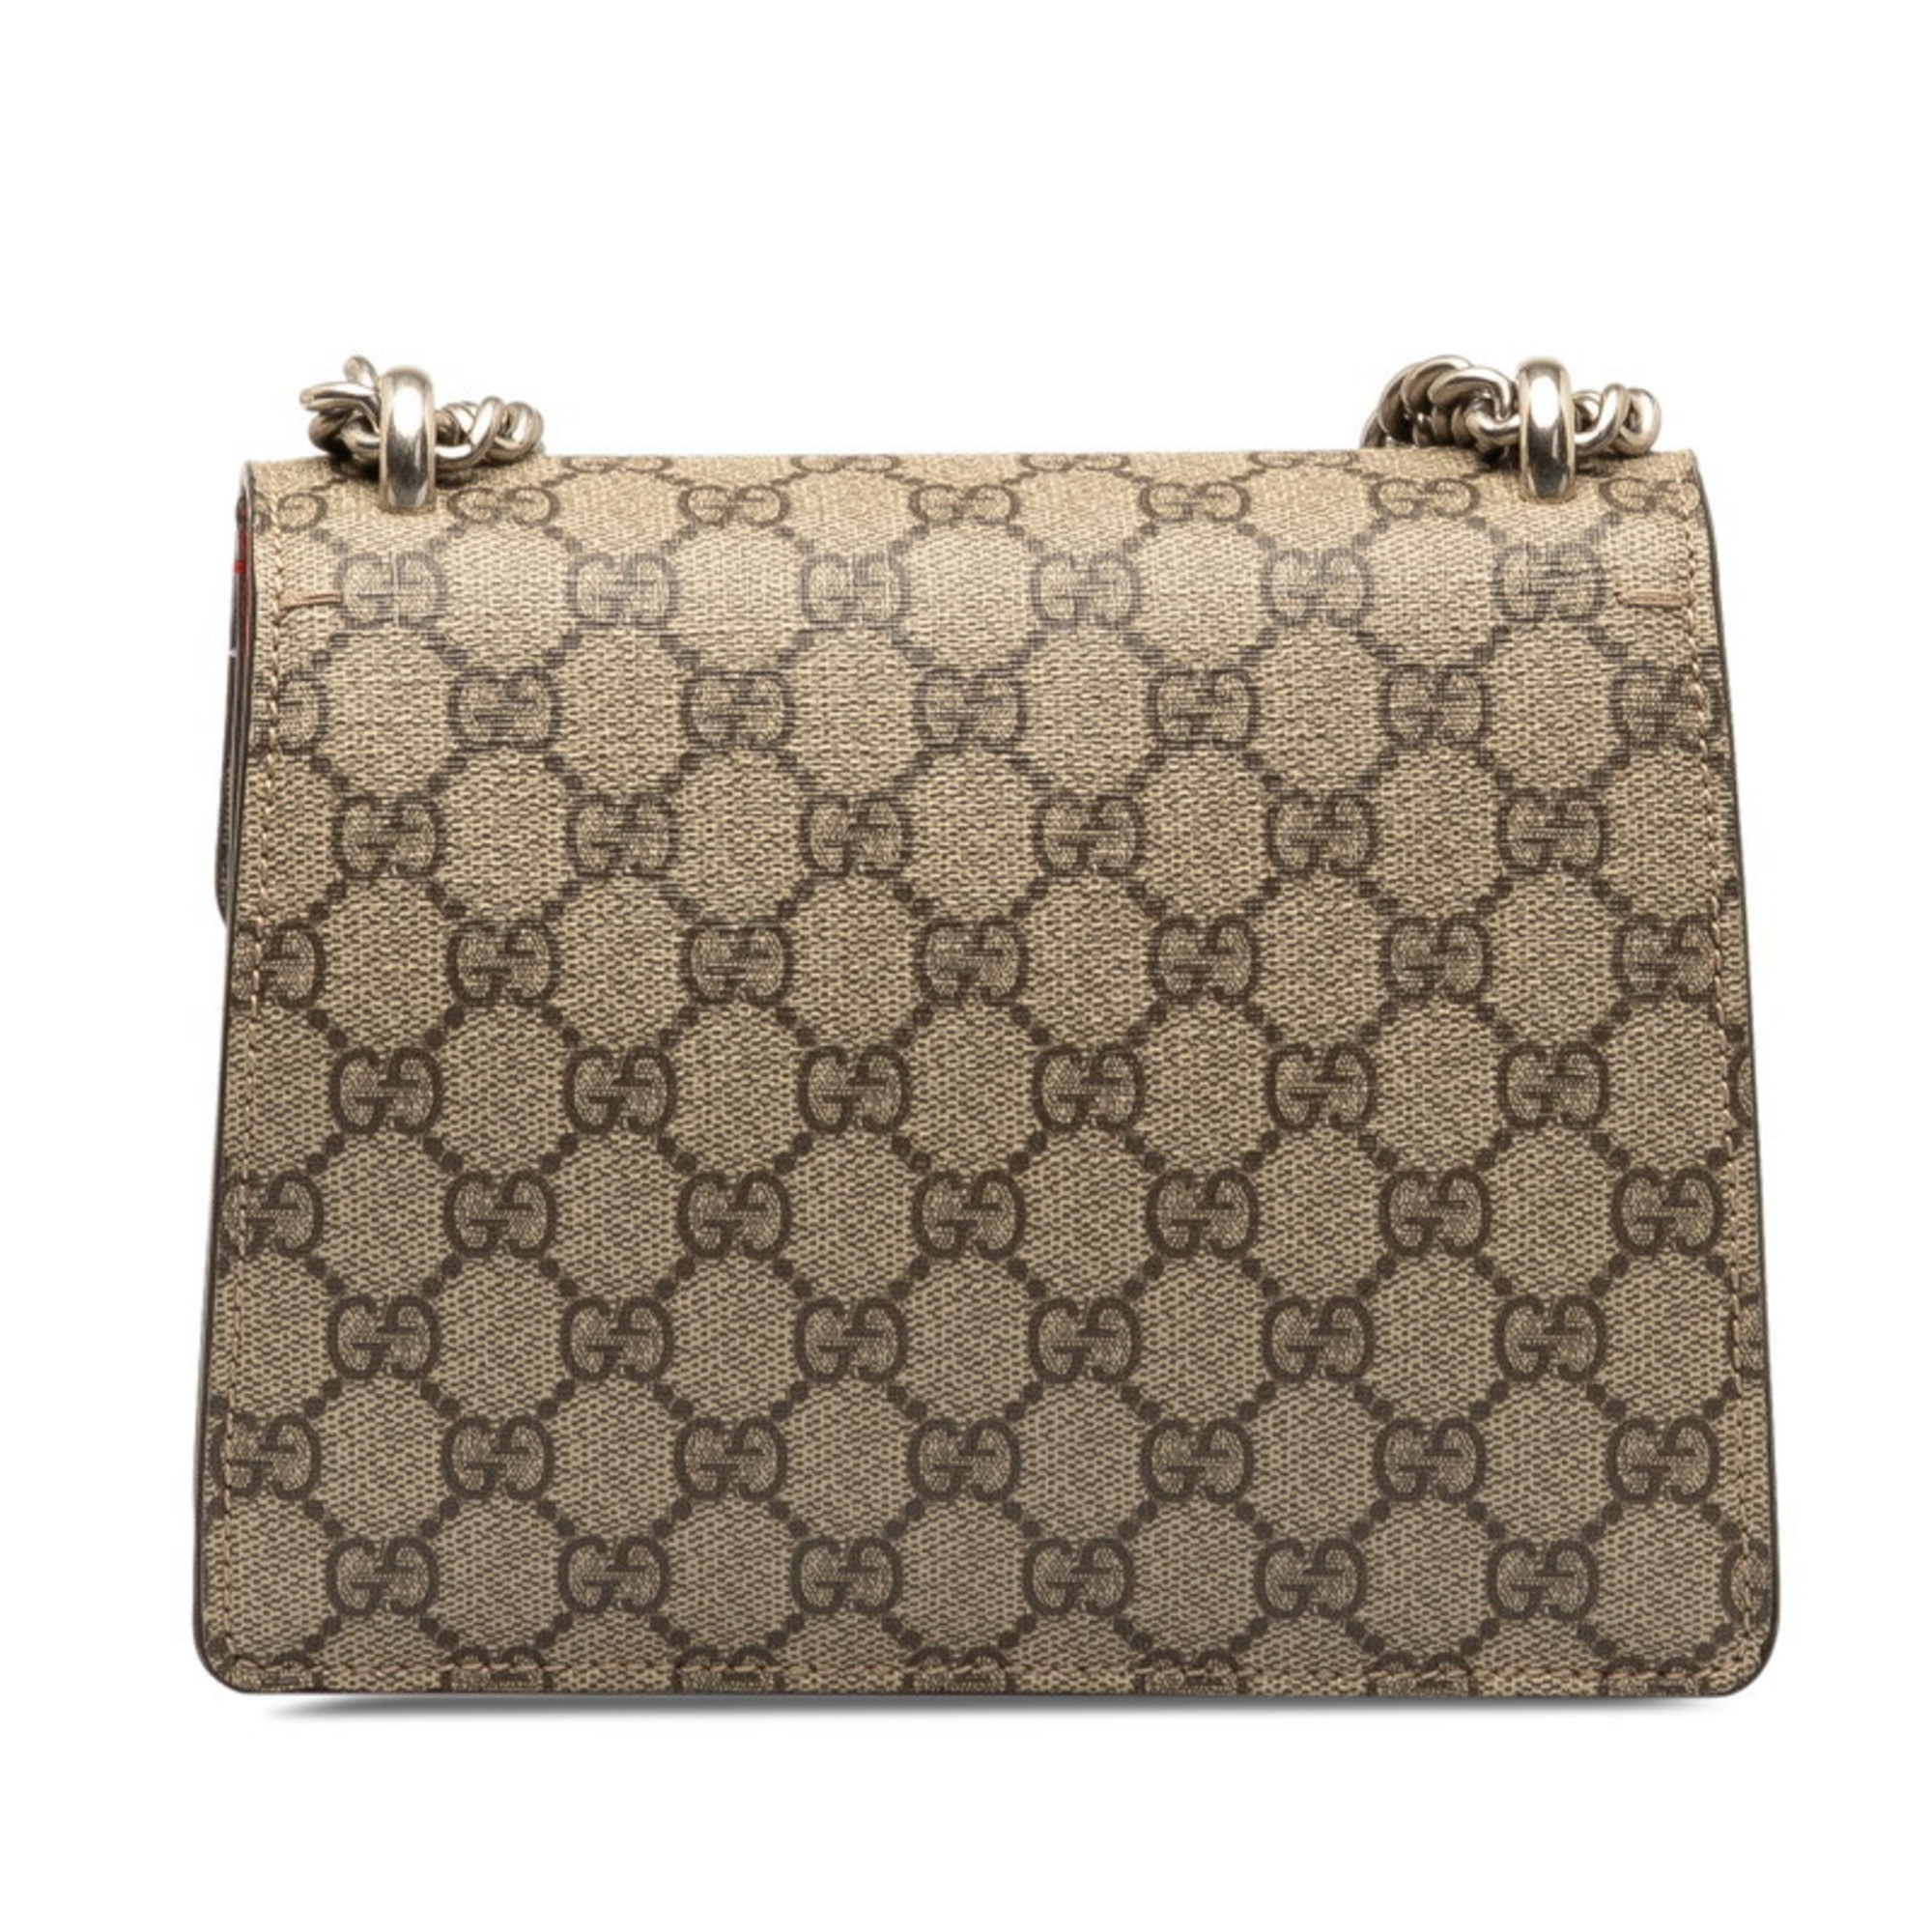 Gucci GG Supreme Dionysus Chain Shoulder Bag 421970 Beige Red PVC Suede Women's GUCCI